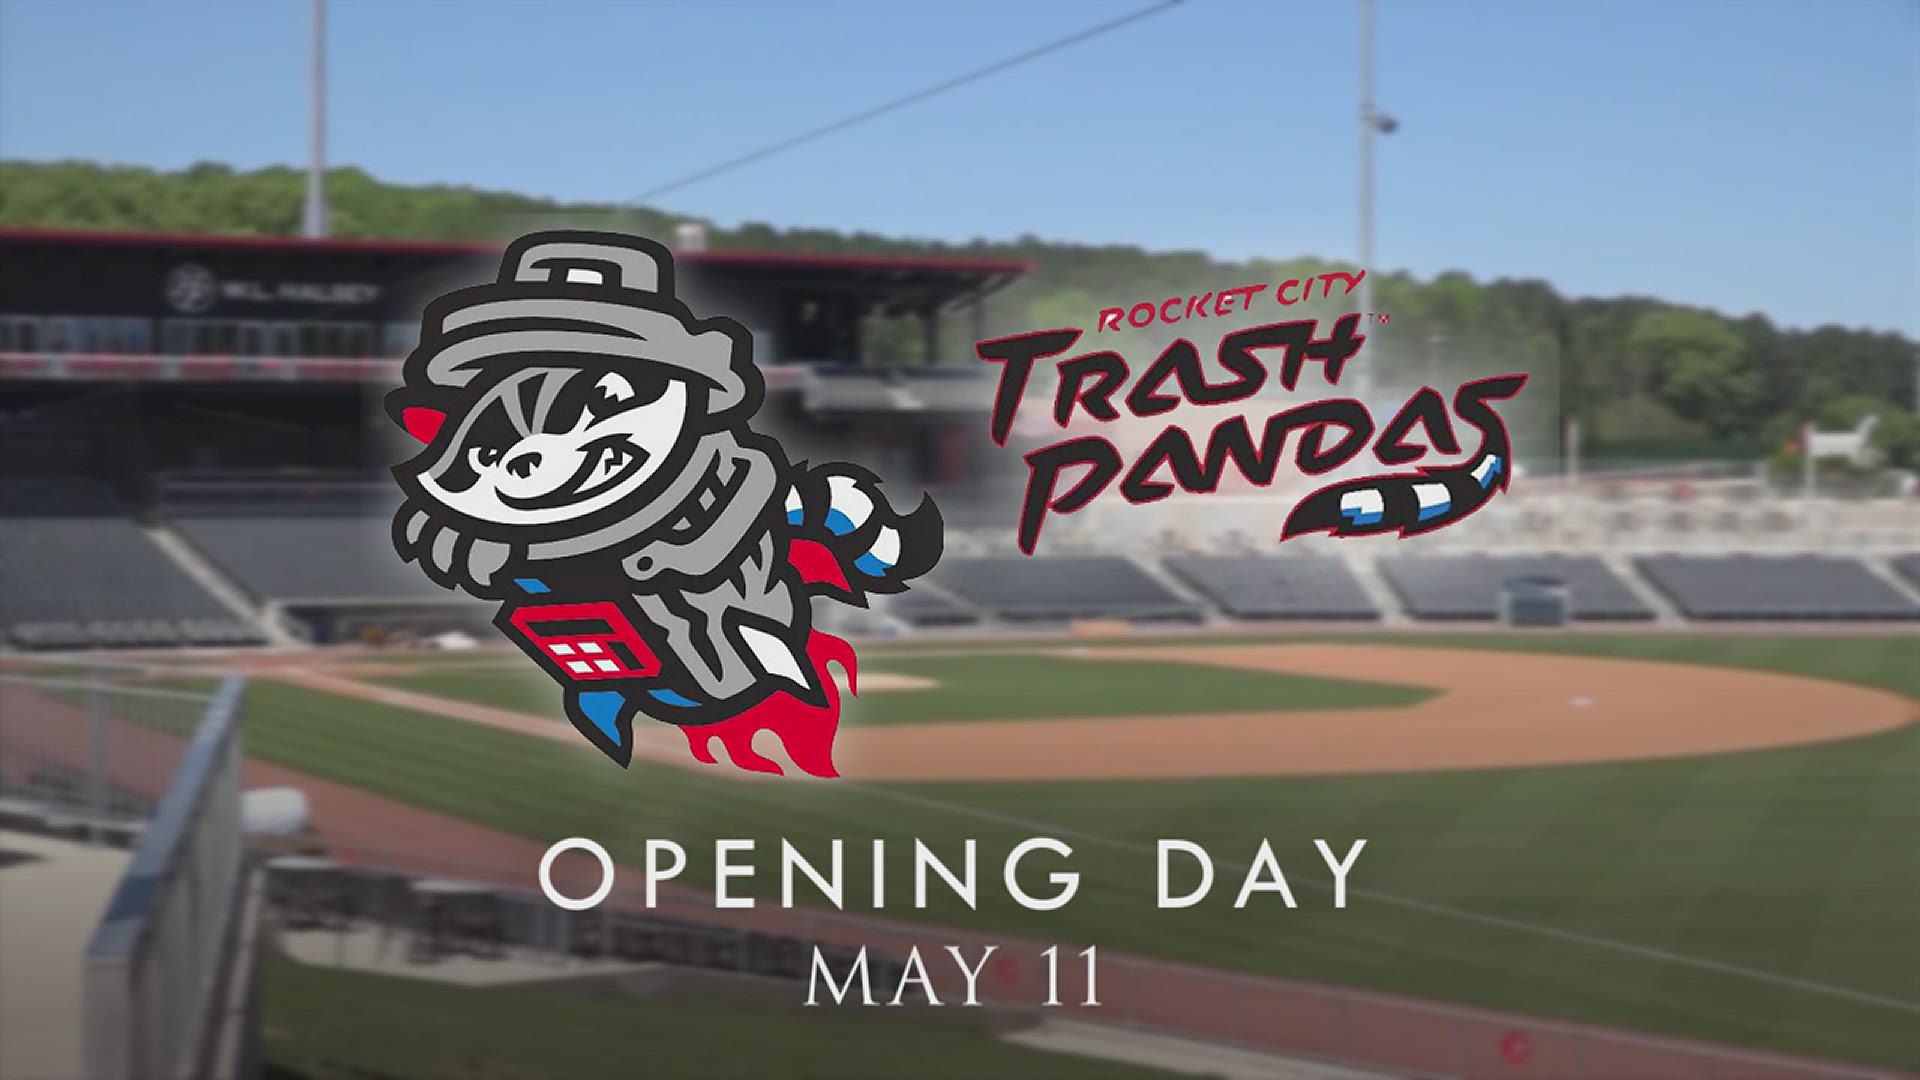 The Rocket City Trash Pandas open their home season on May 10, 2021.